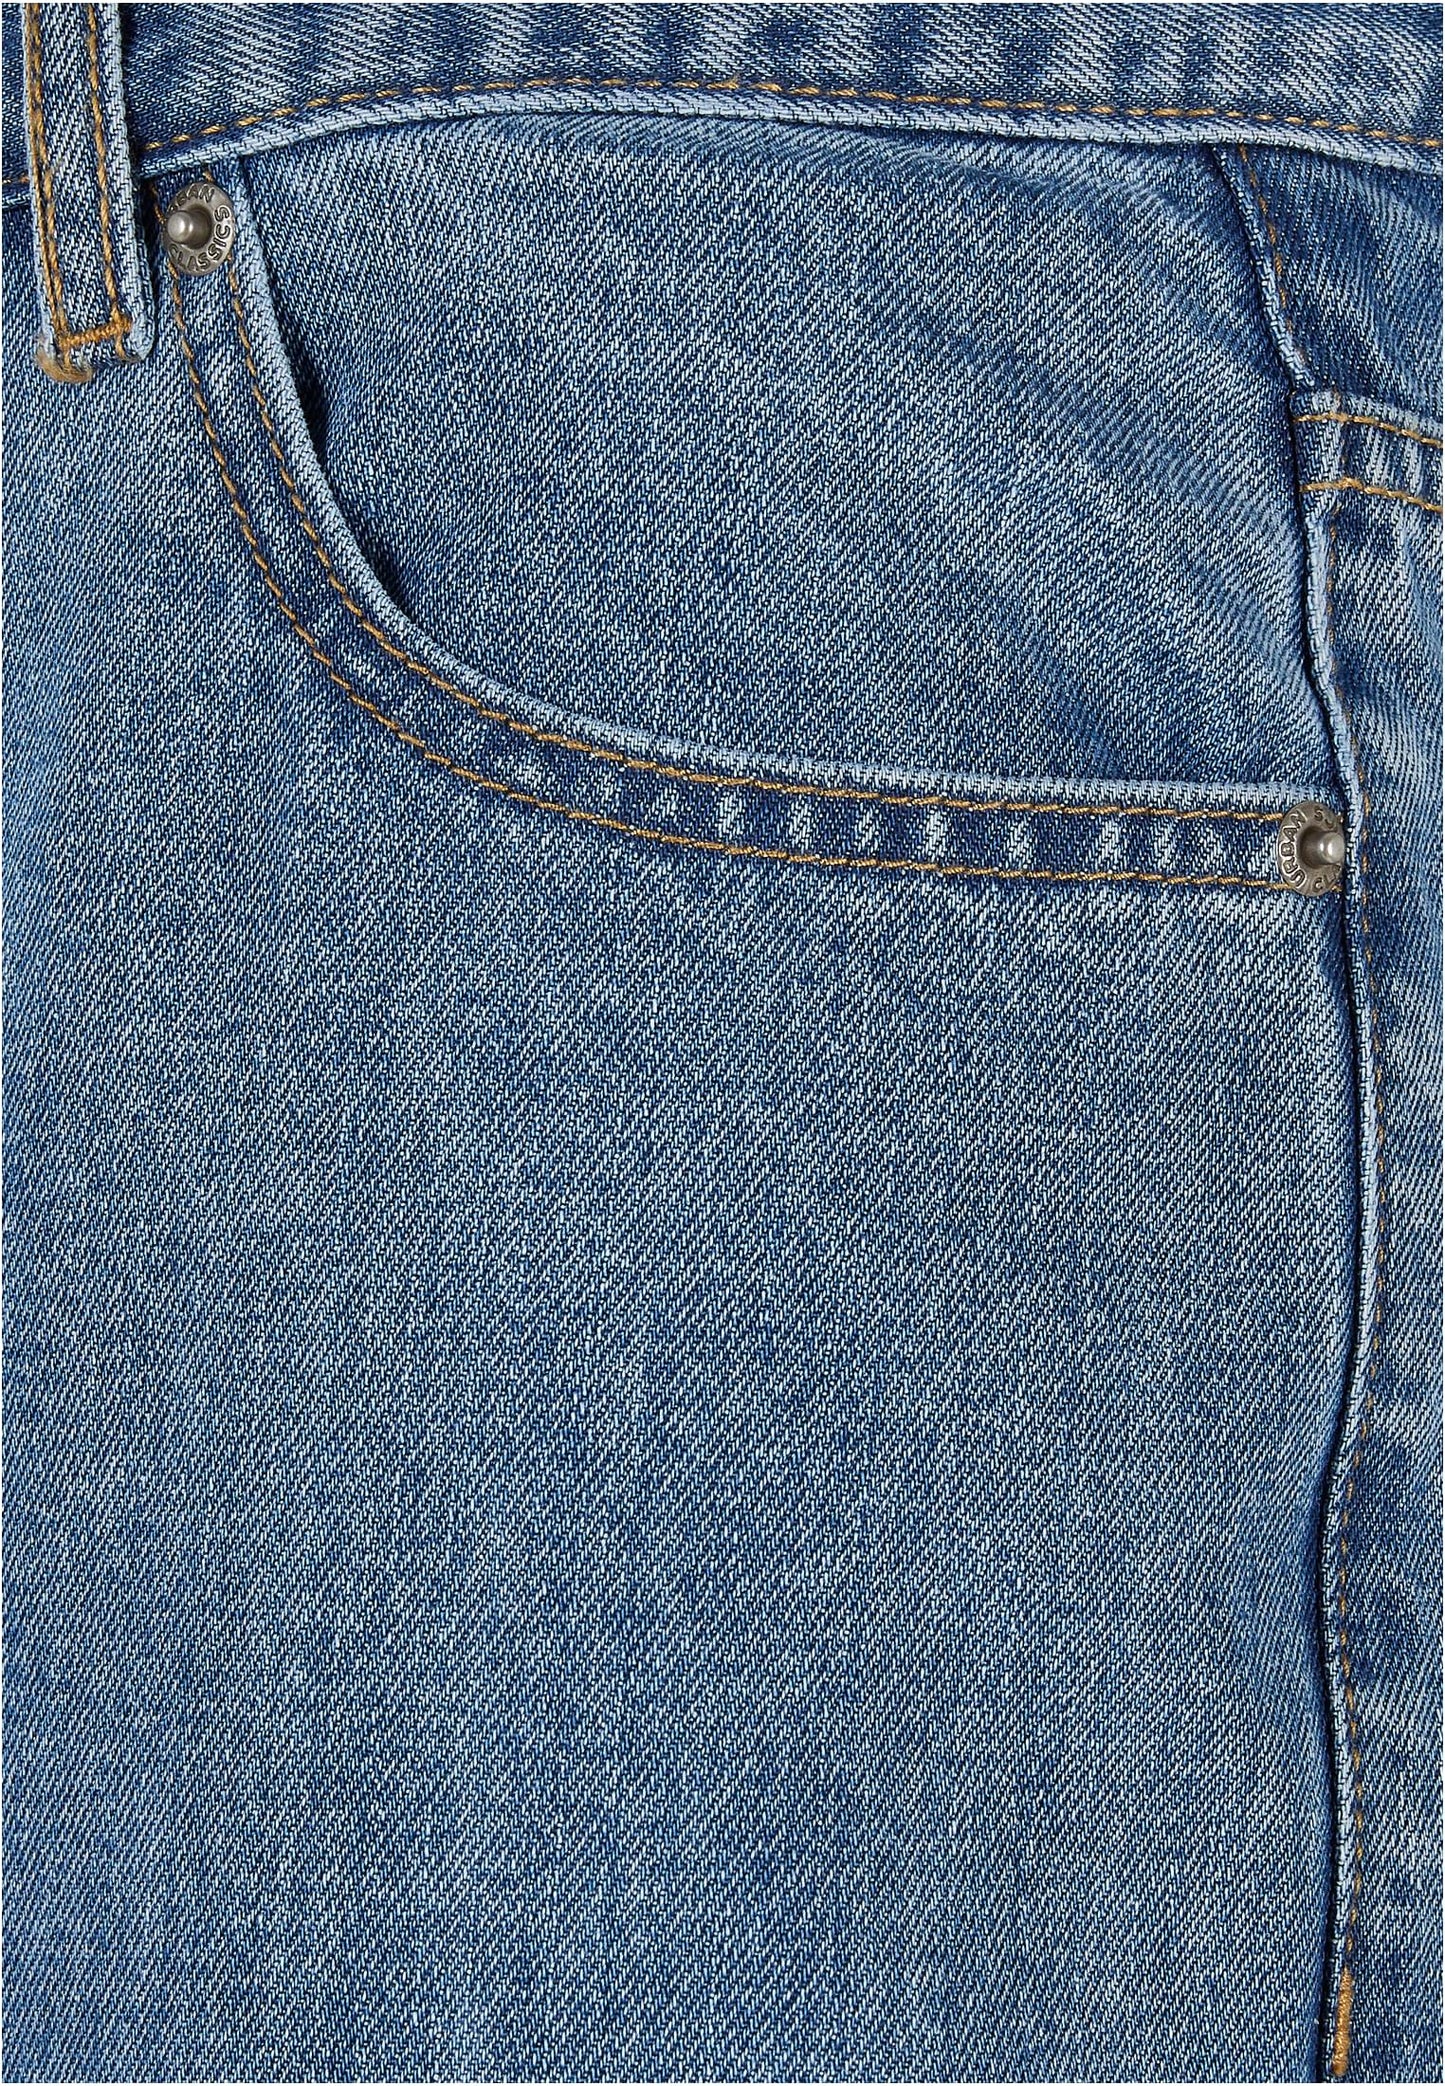 90's Jeans, Light Blue Washed